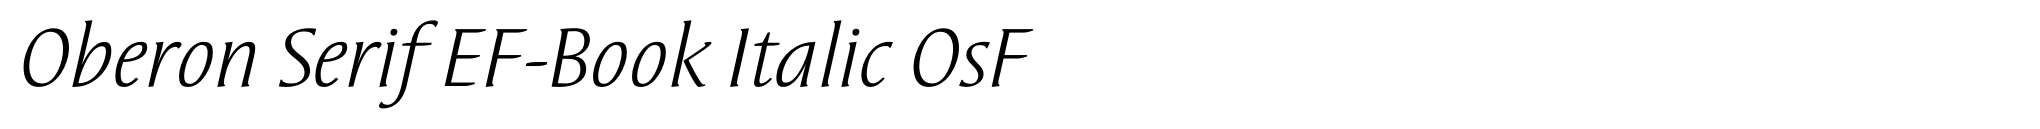 Oberon Serif EF-Book Italic OsF image